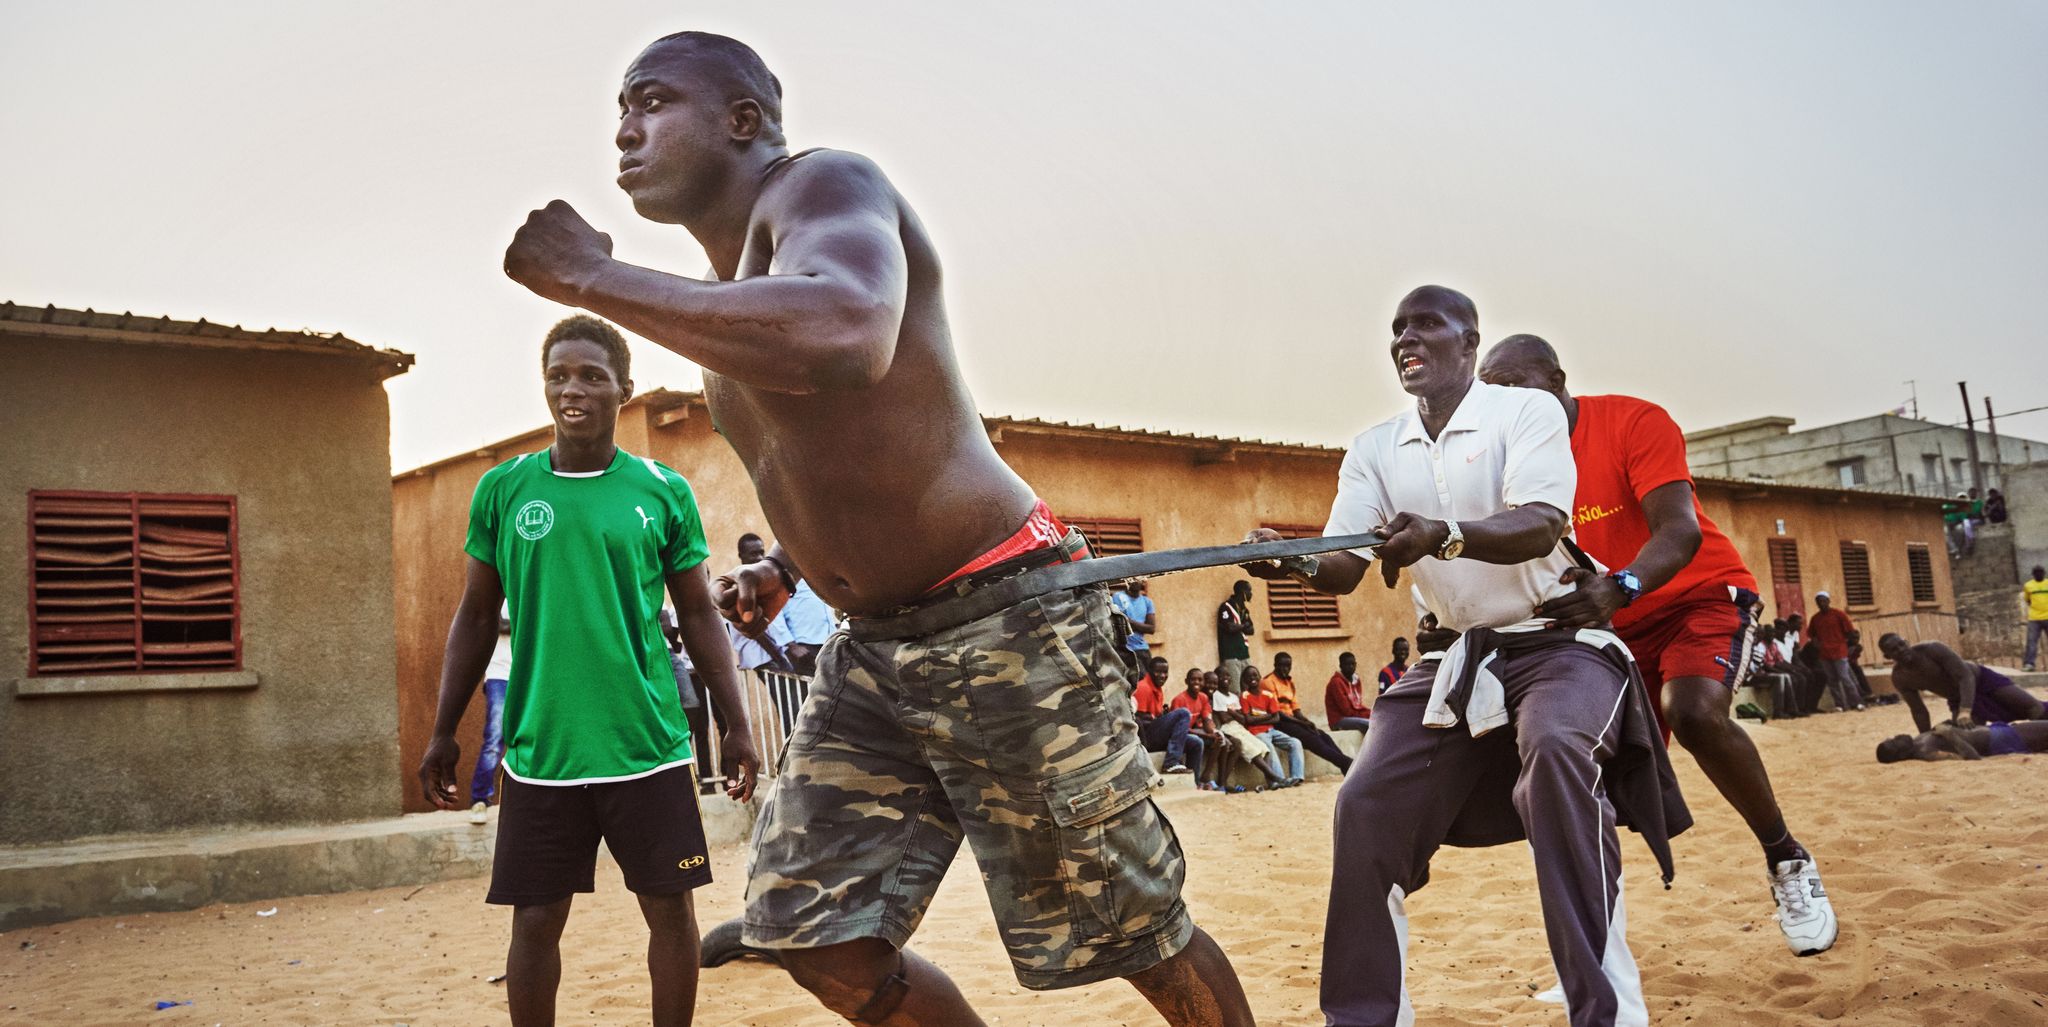 The Gris-gris Wrestlers of Senegal